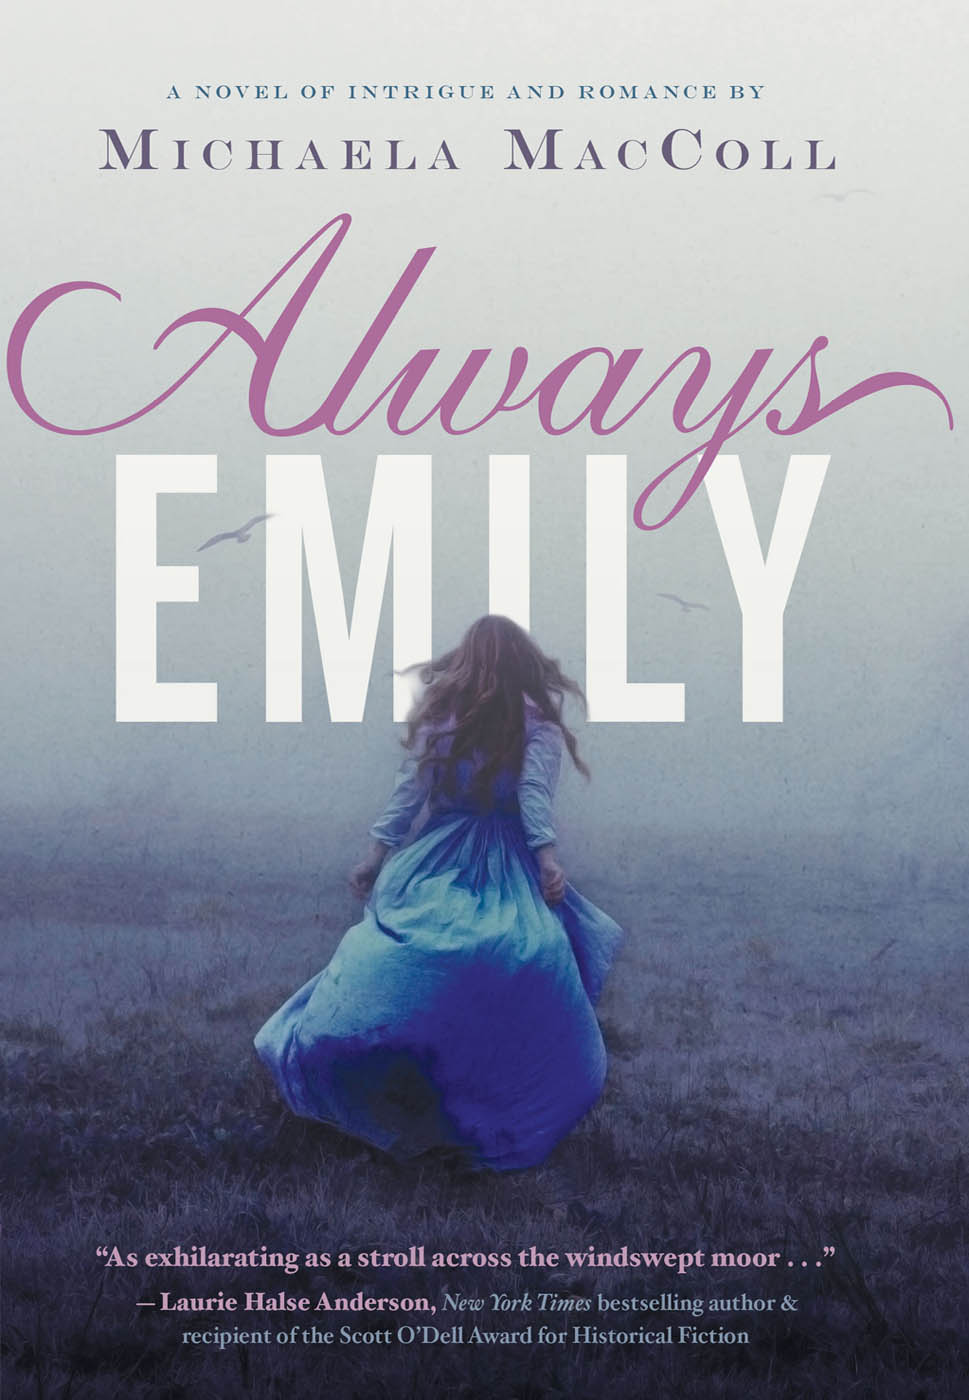 Always Emily (2014) by Michaela MacColl